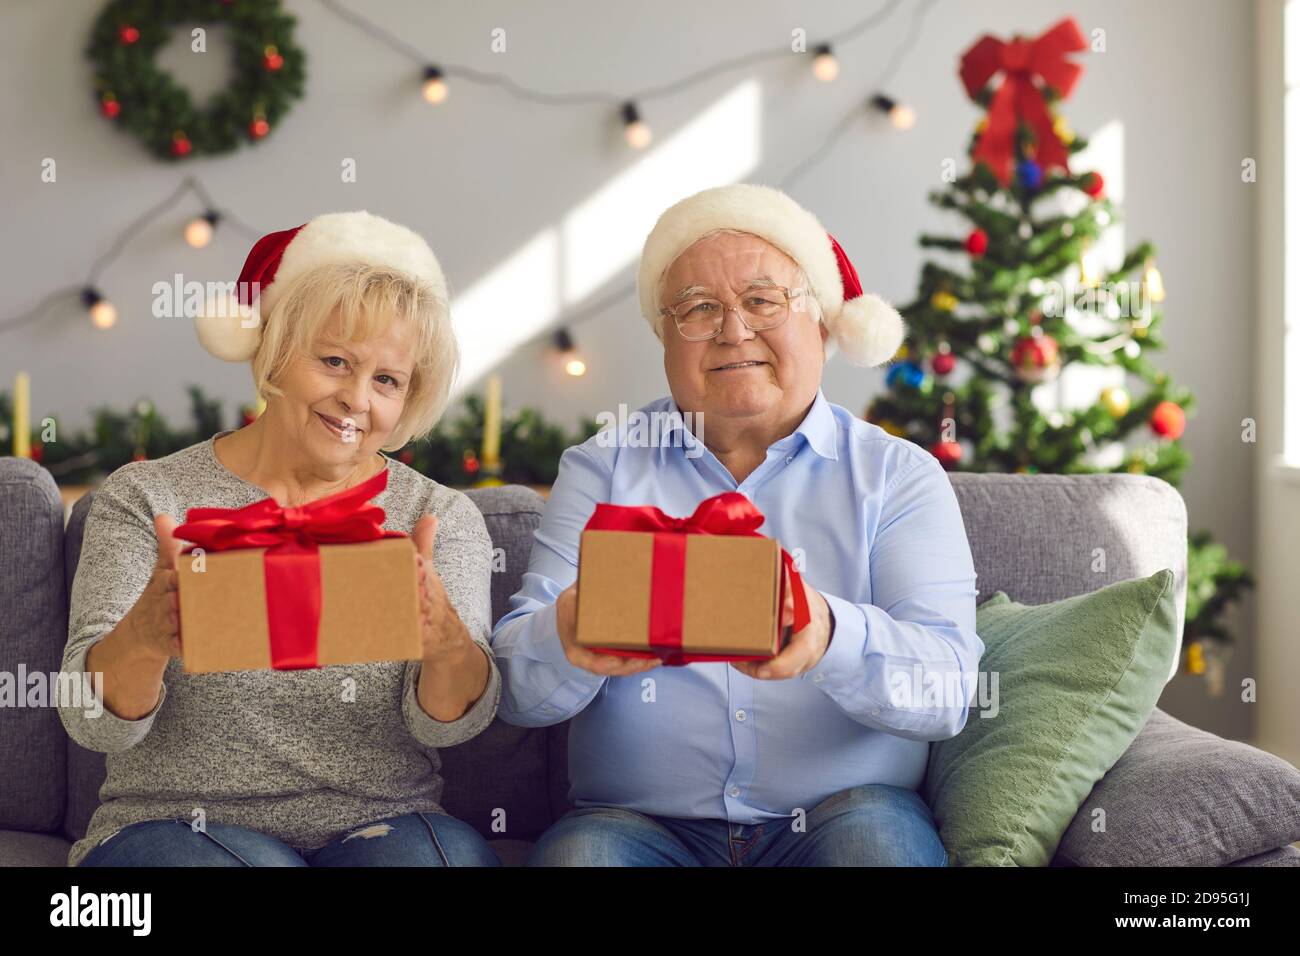 Happy grandma and grandma in Santa hats sitting on sofa holding Christmas presents for grandkids Stock Photo